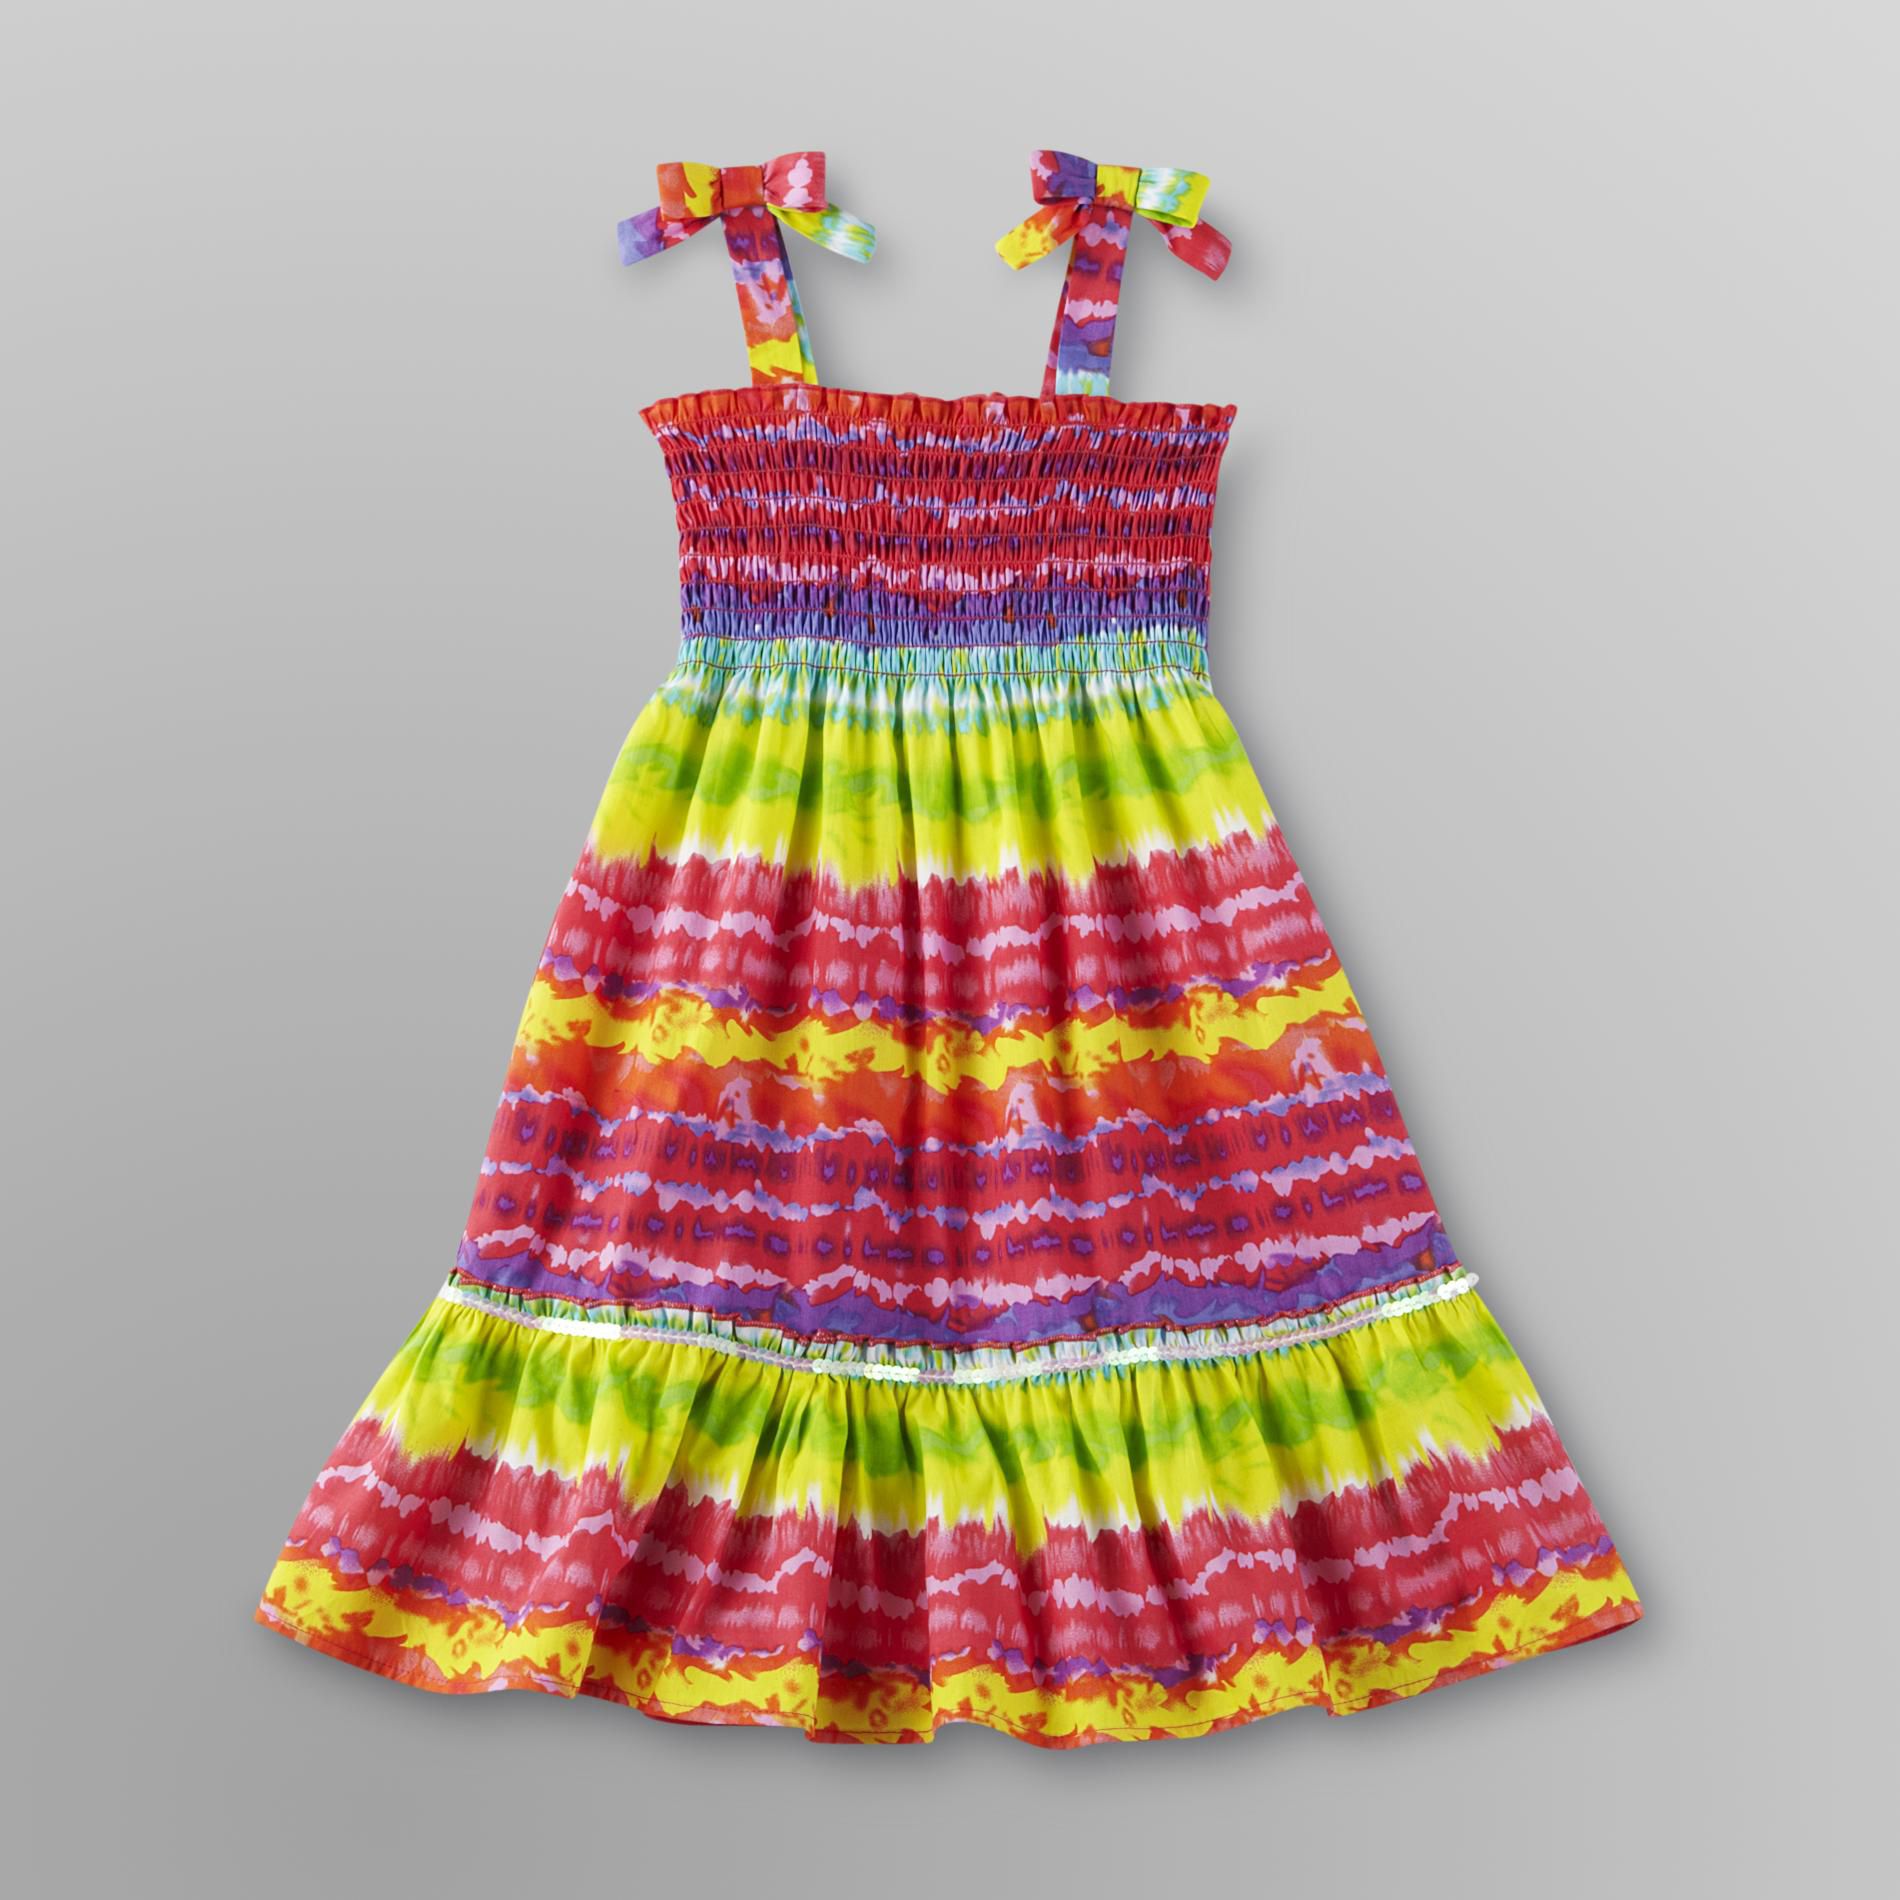 Basic Editions Girl's Smocked Sundress - Tie-Dye